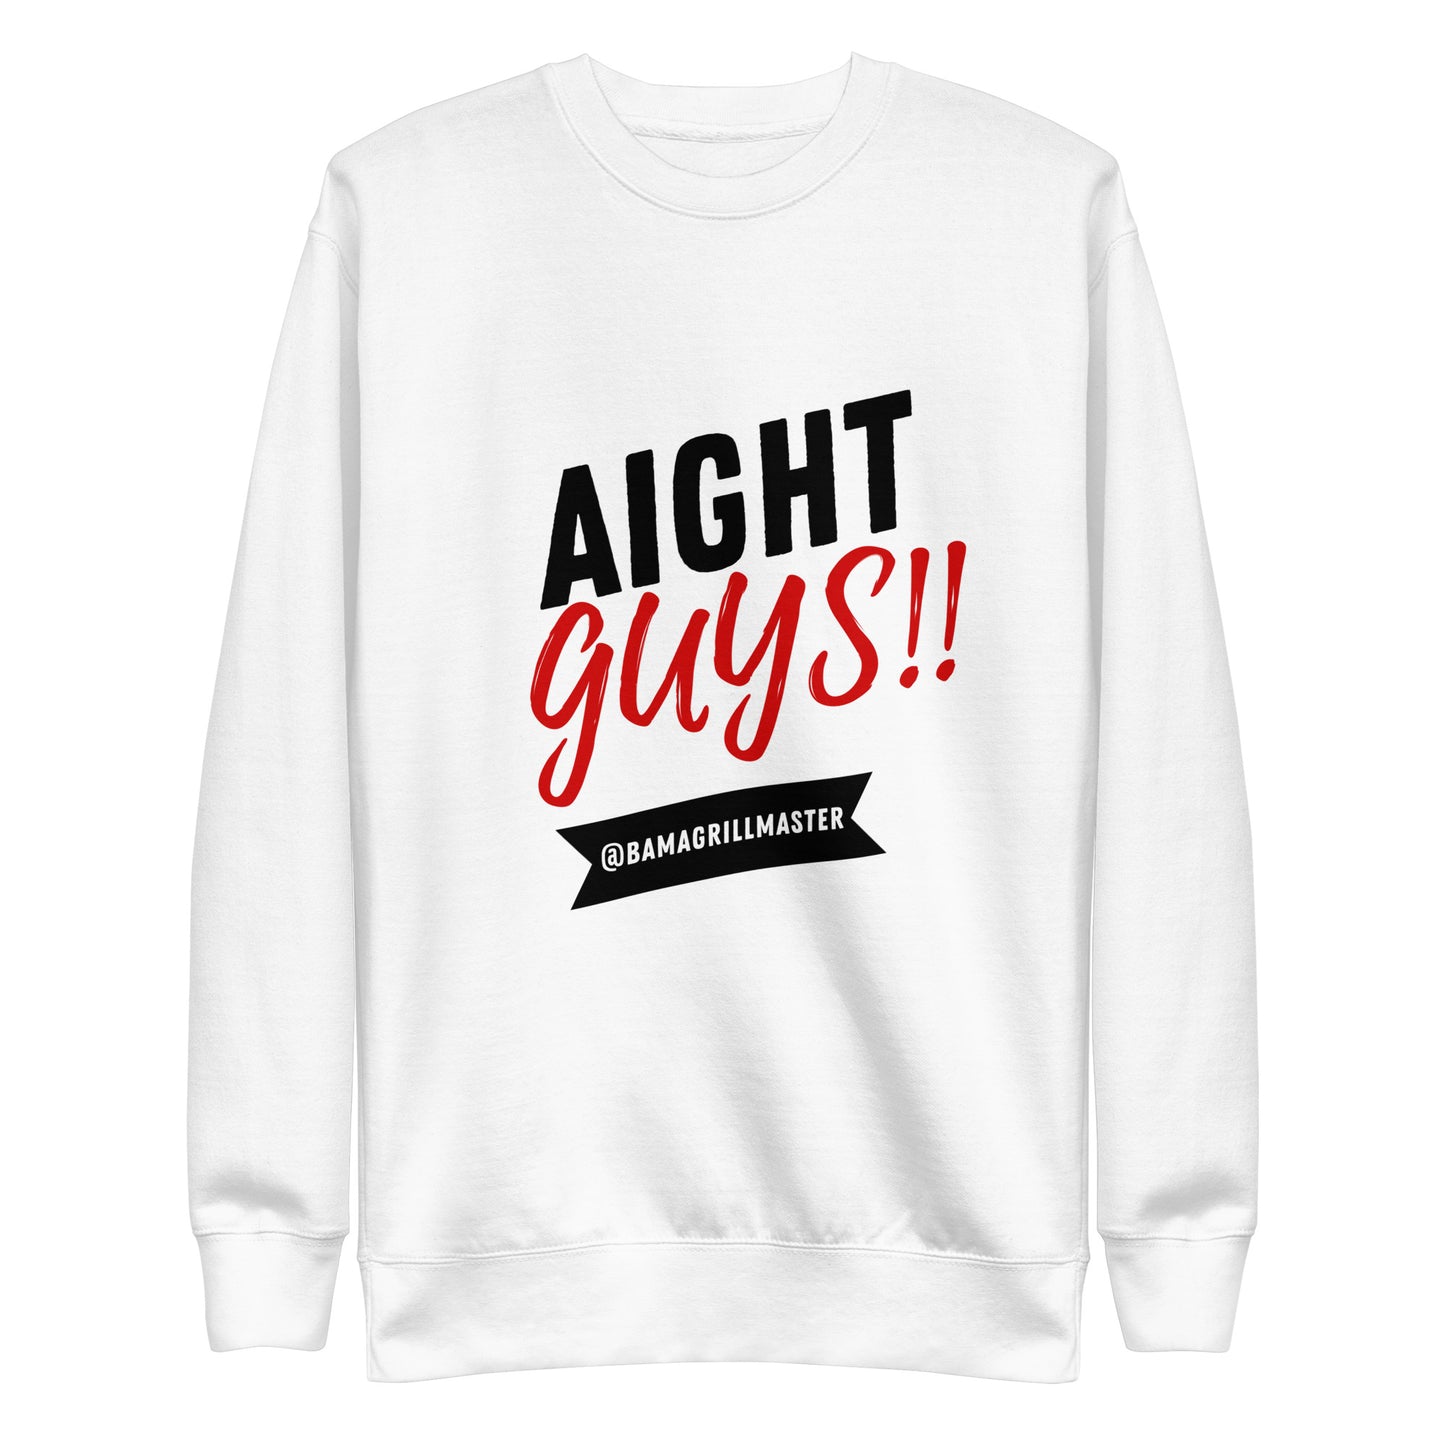 "Aight Guys!!" Crew Neck Sweatshirt